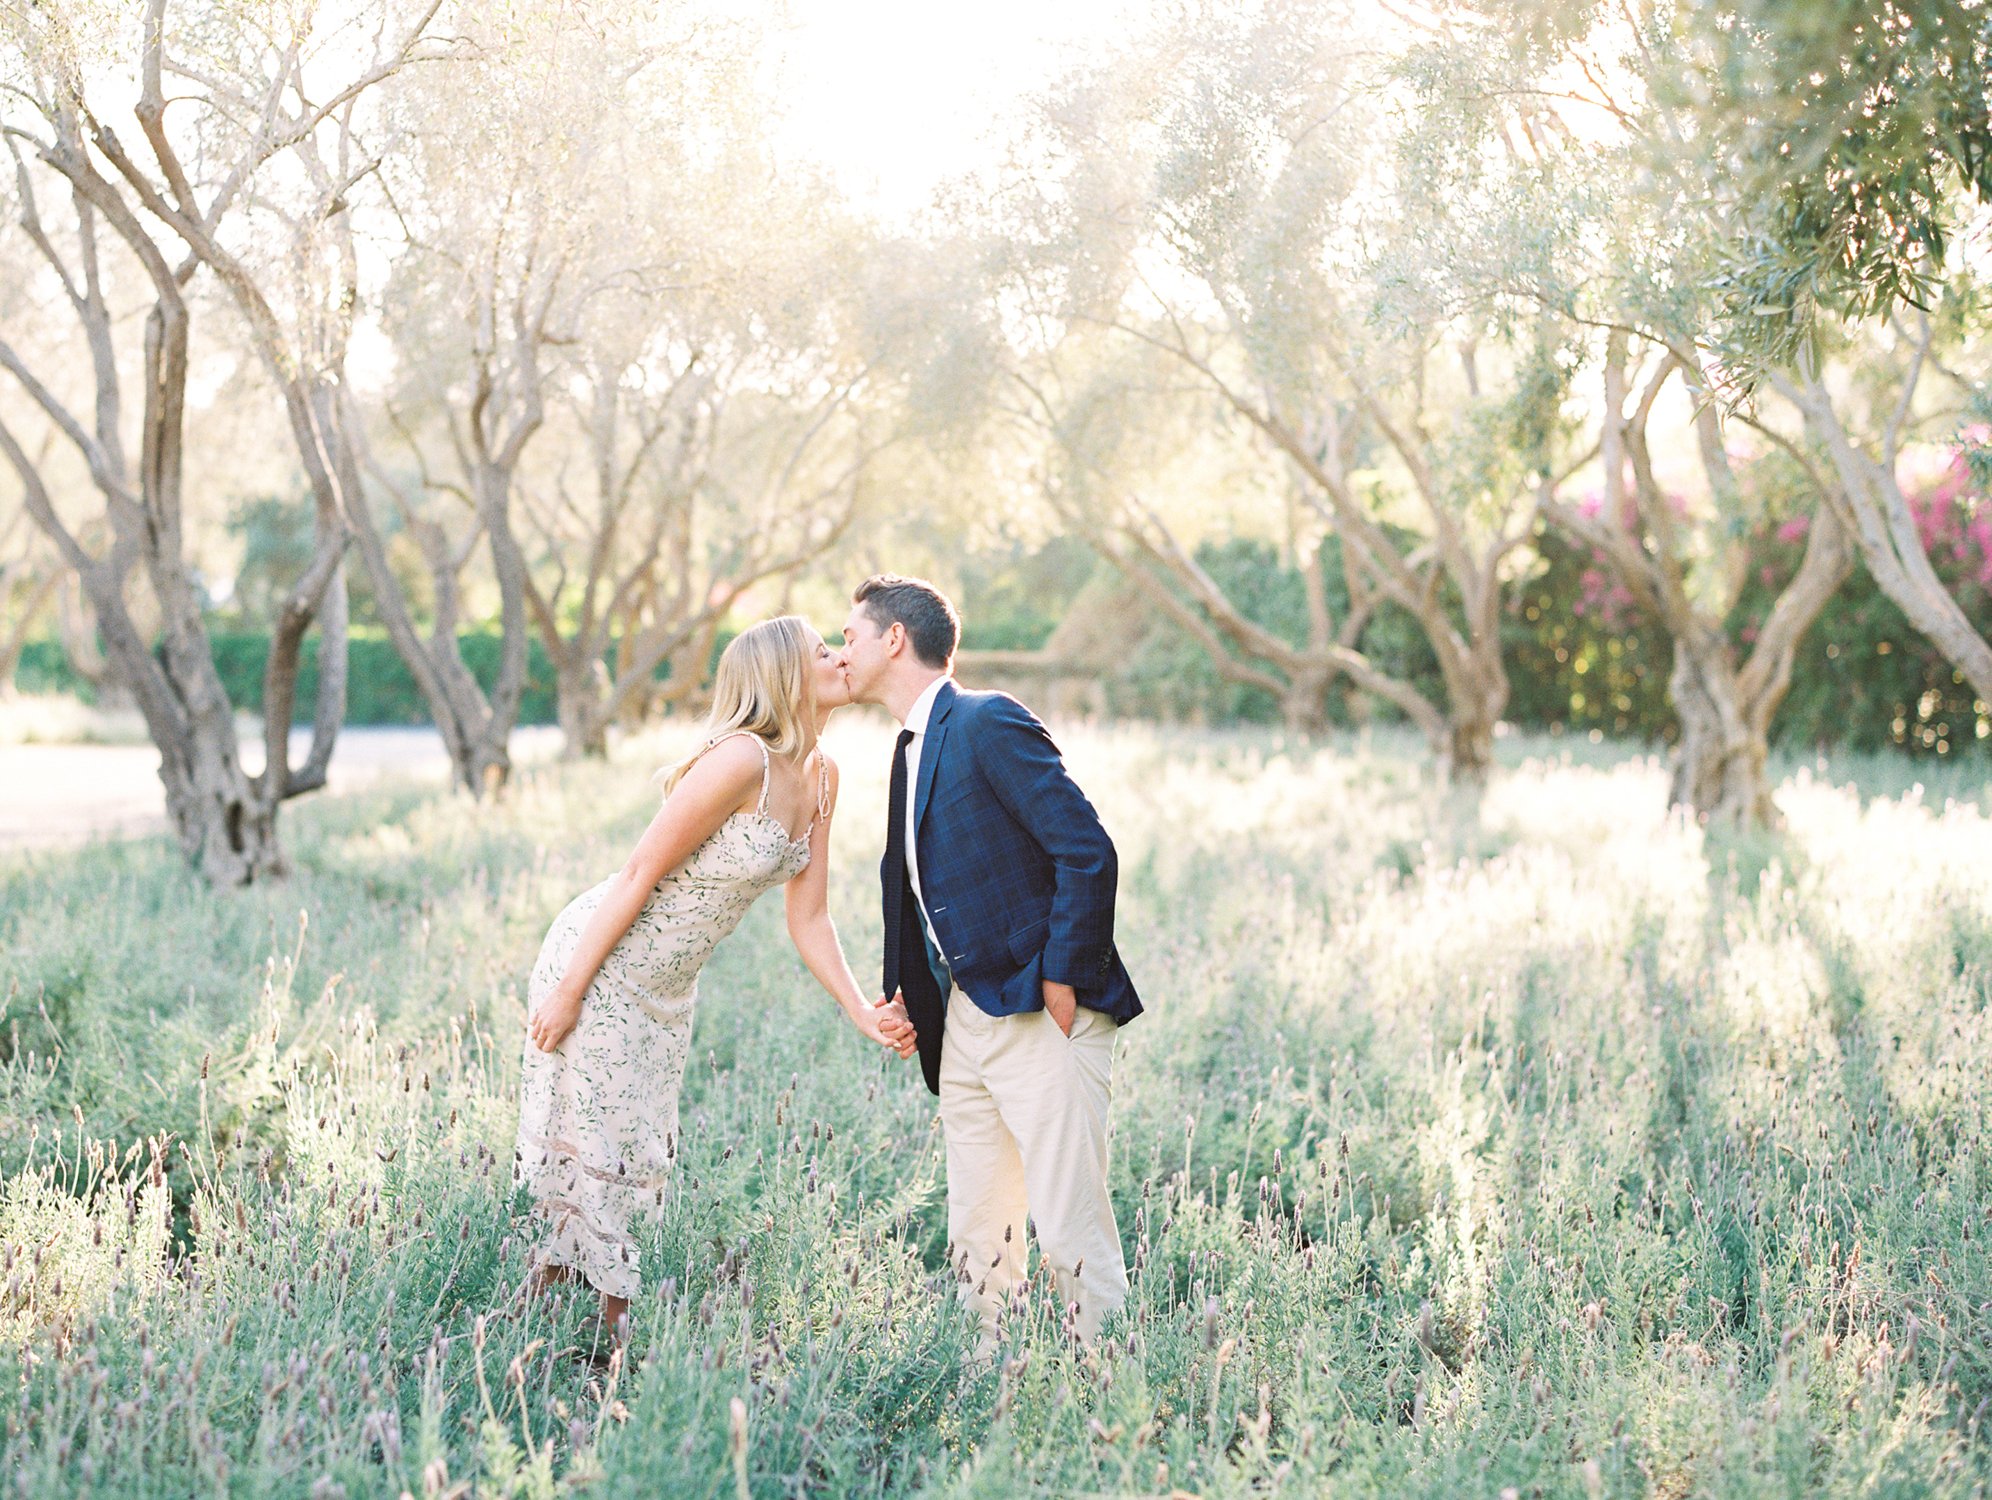 wisteria-photography.com | Wisteria Photography | San Ysidro Ranch | Weddings Engagement | Southern California Photographer-13.jpg